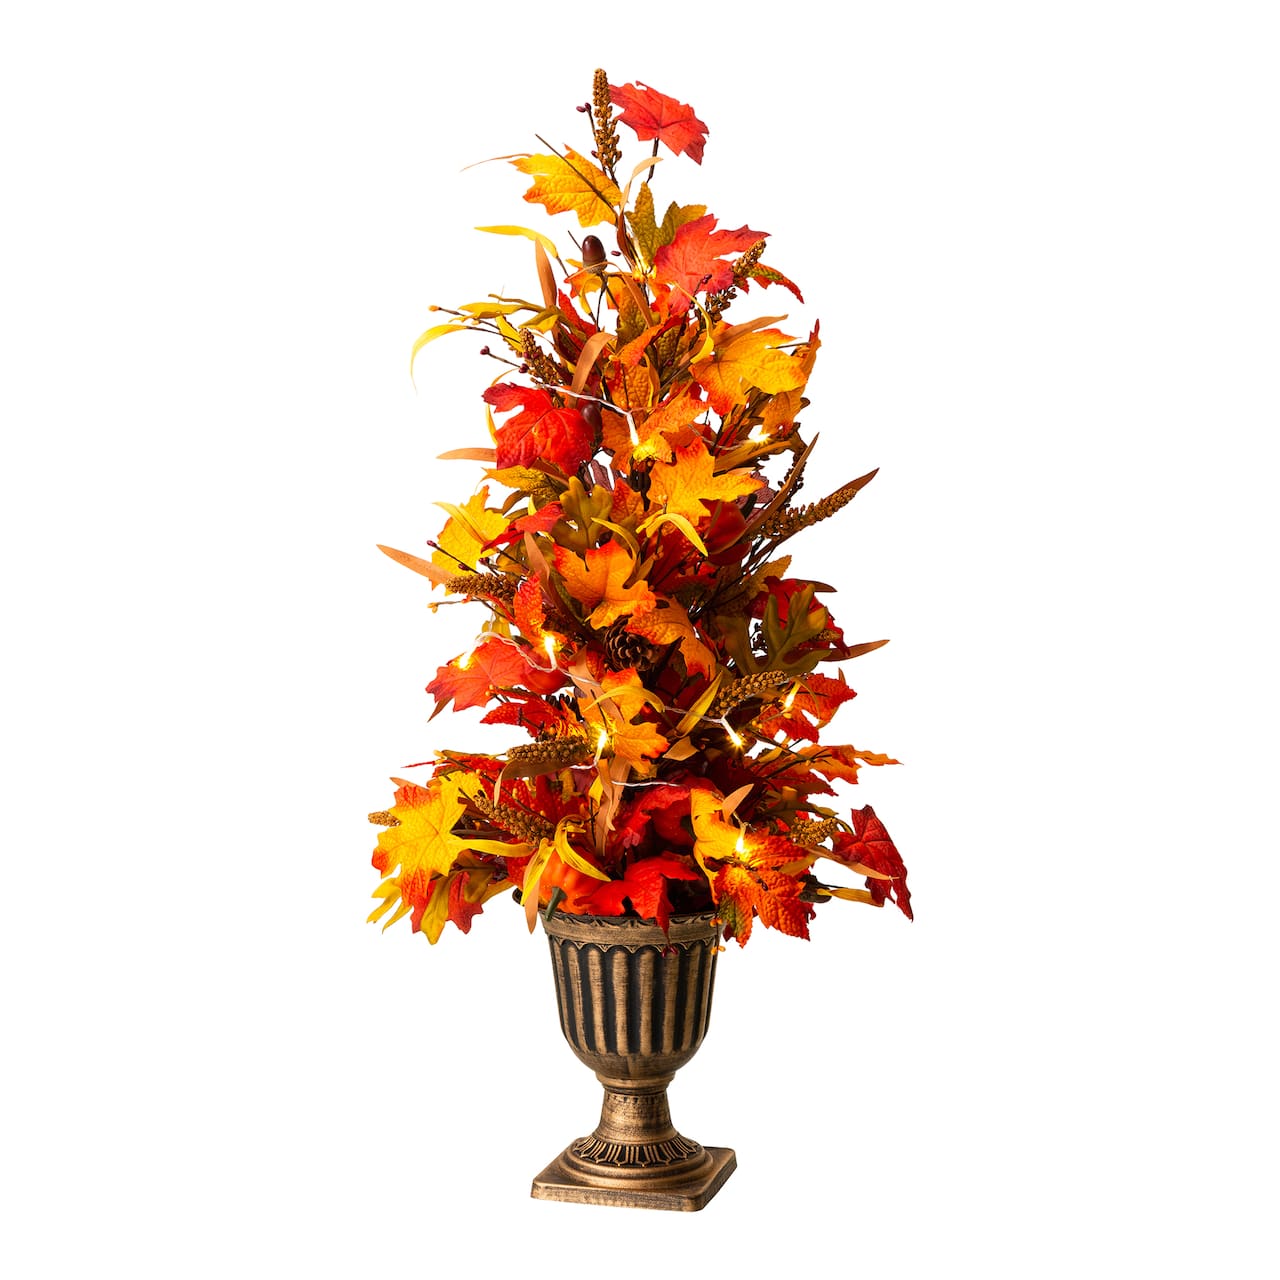 3' Glitzhome Fall Lighted Maple Leaves Tree in Urn + 13" Ashland Orange Craft Pumpkin $50.05 + Free Shipping